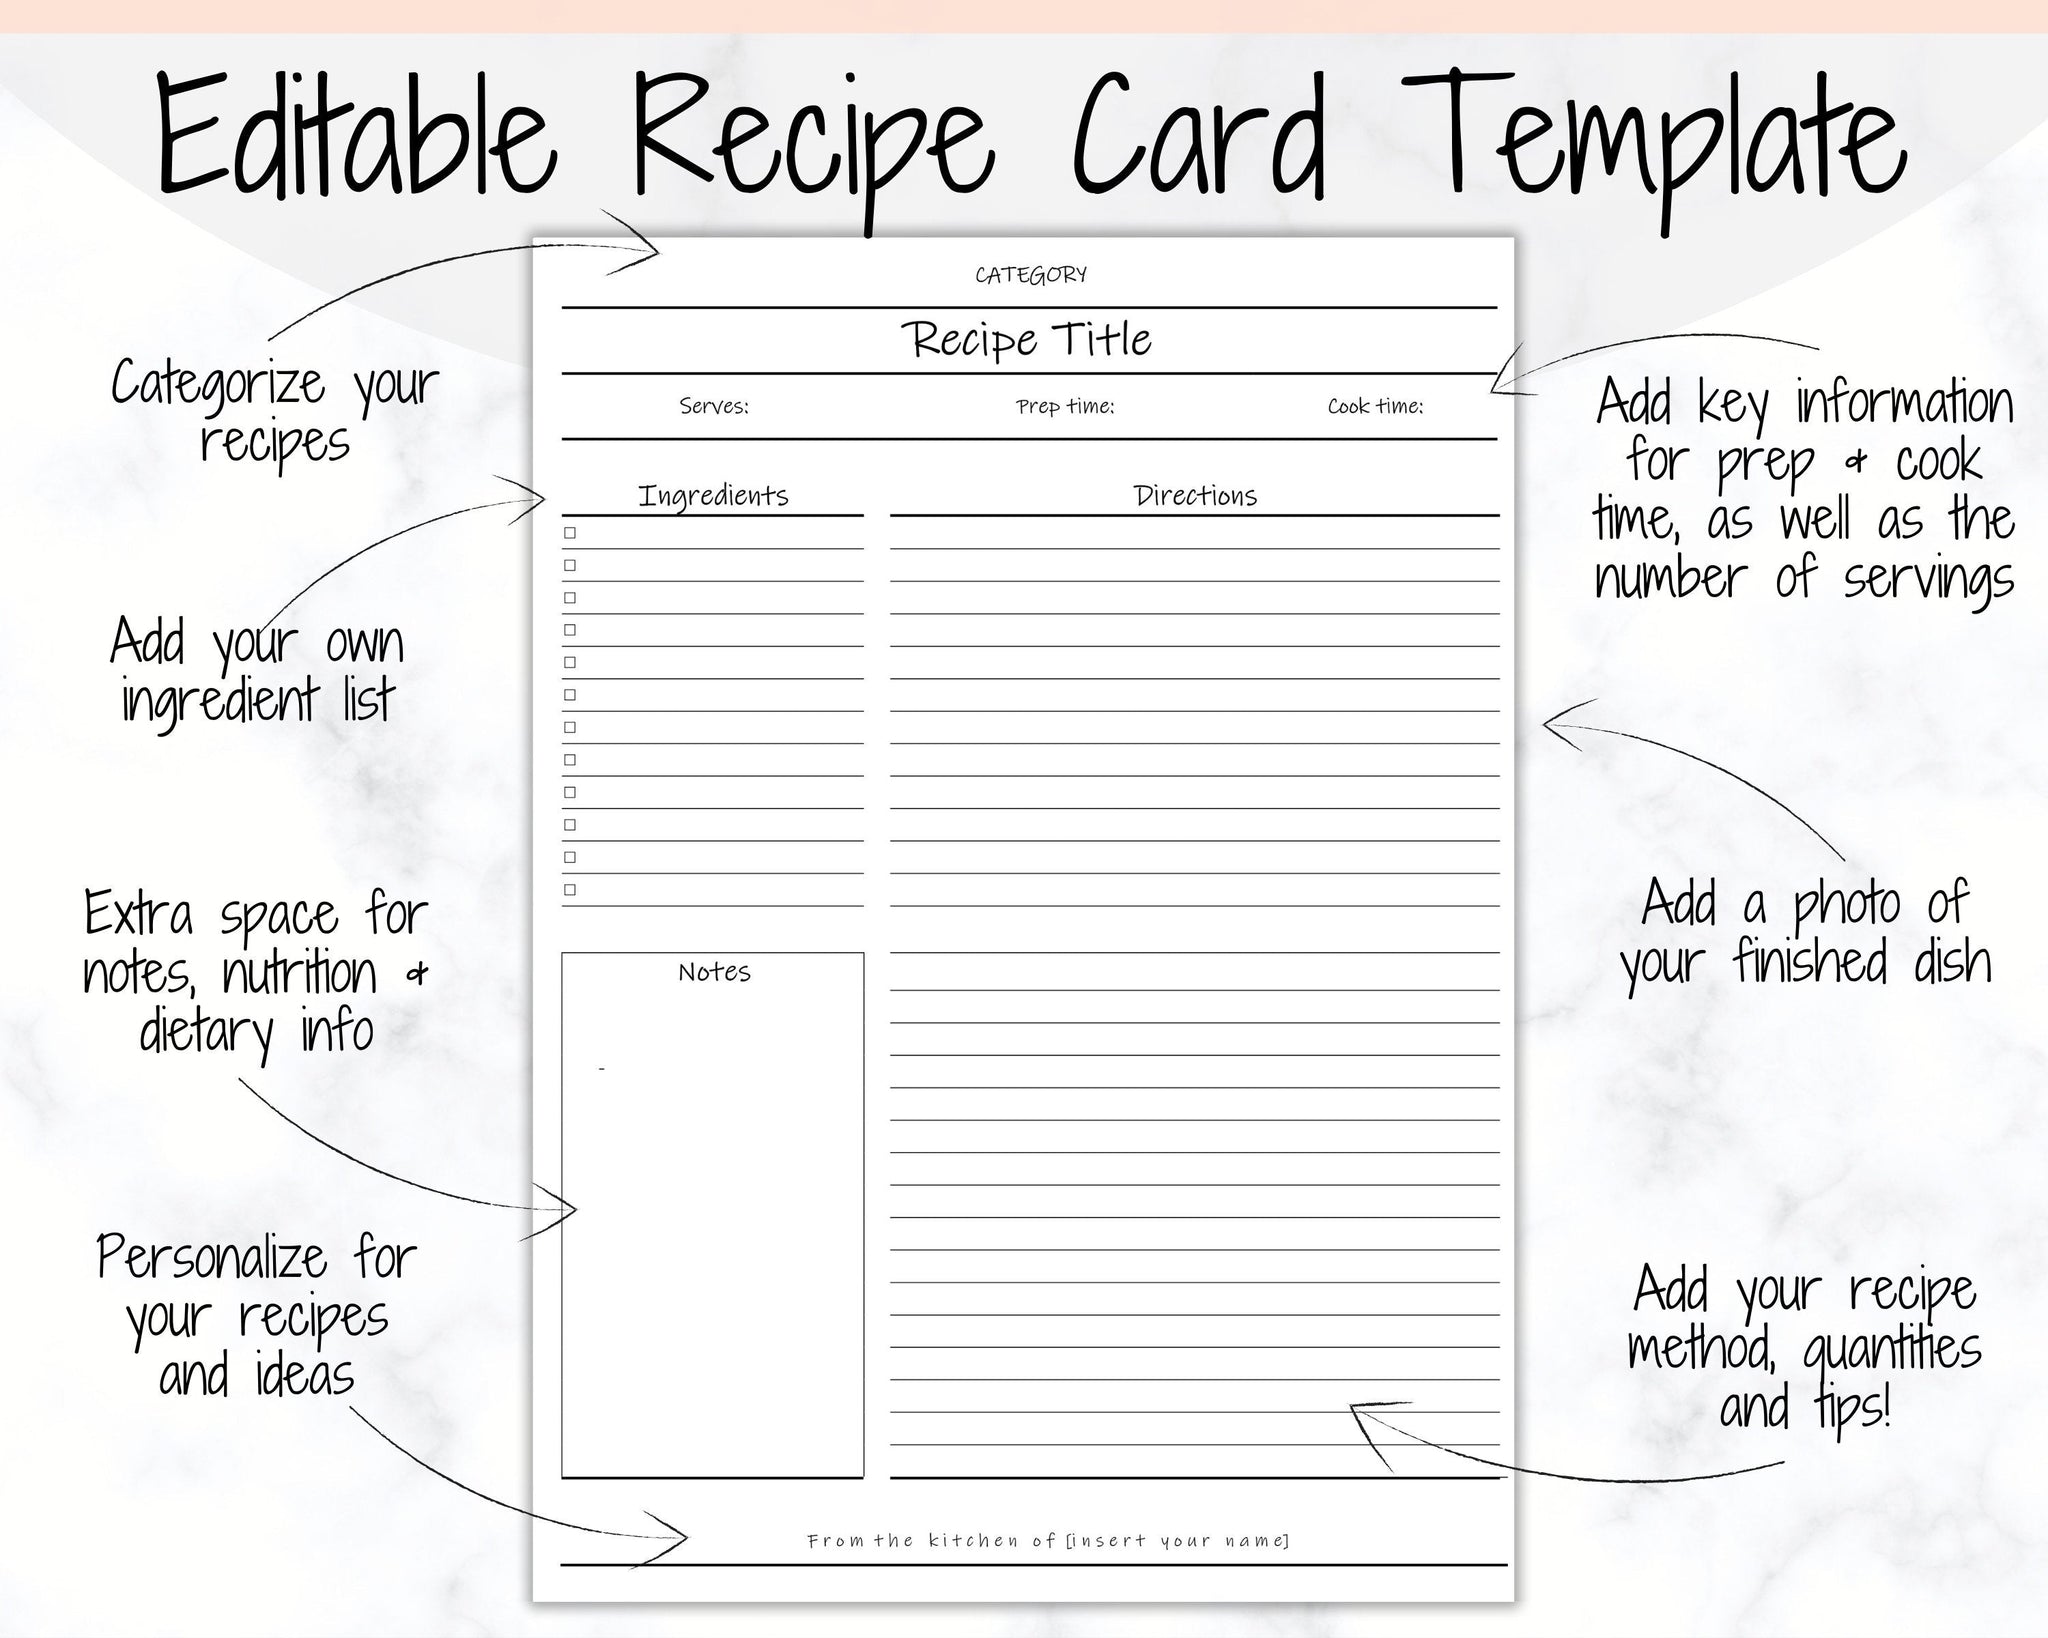 blank recipe book template